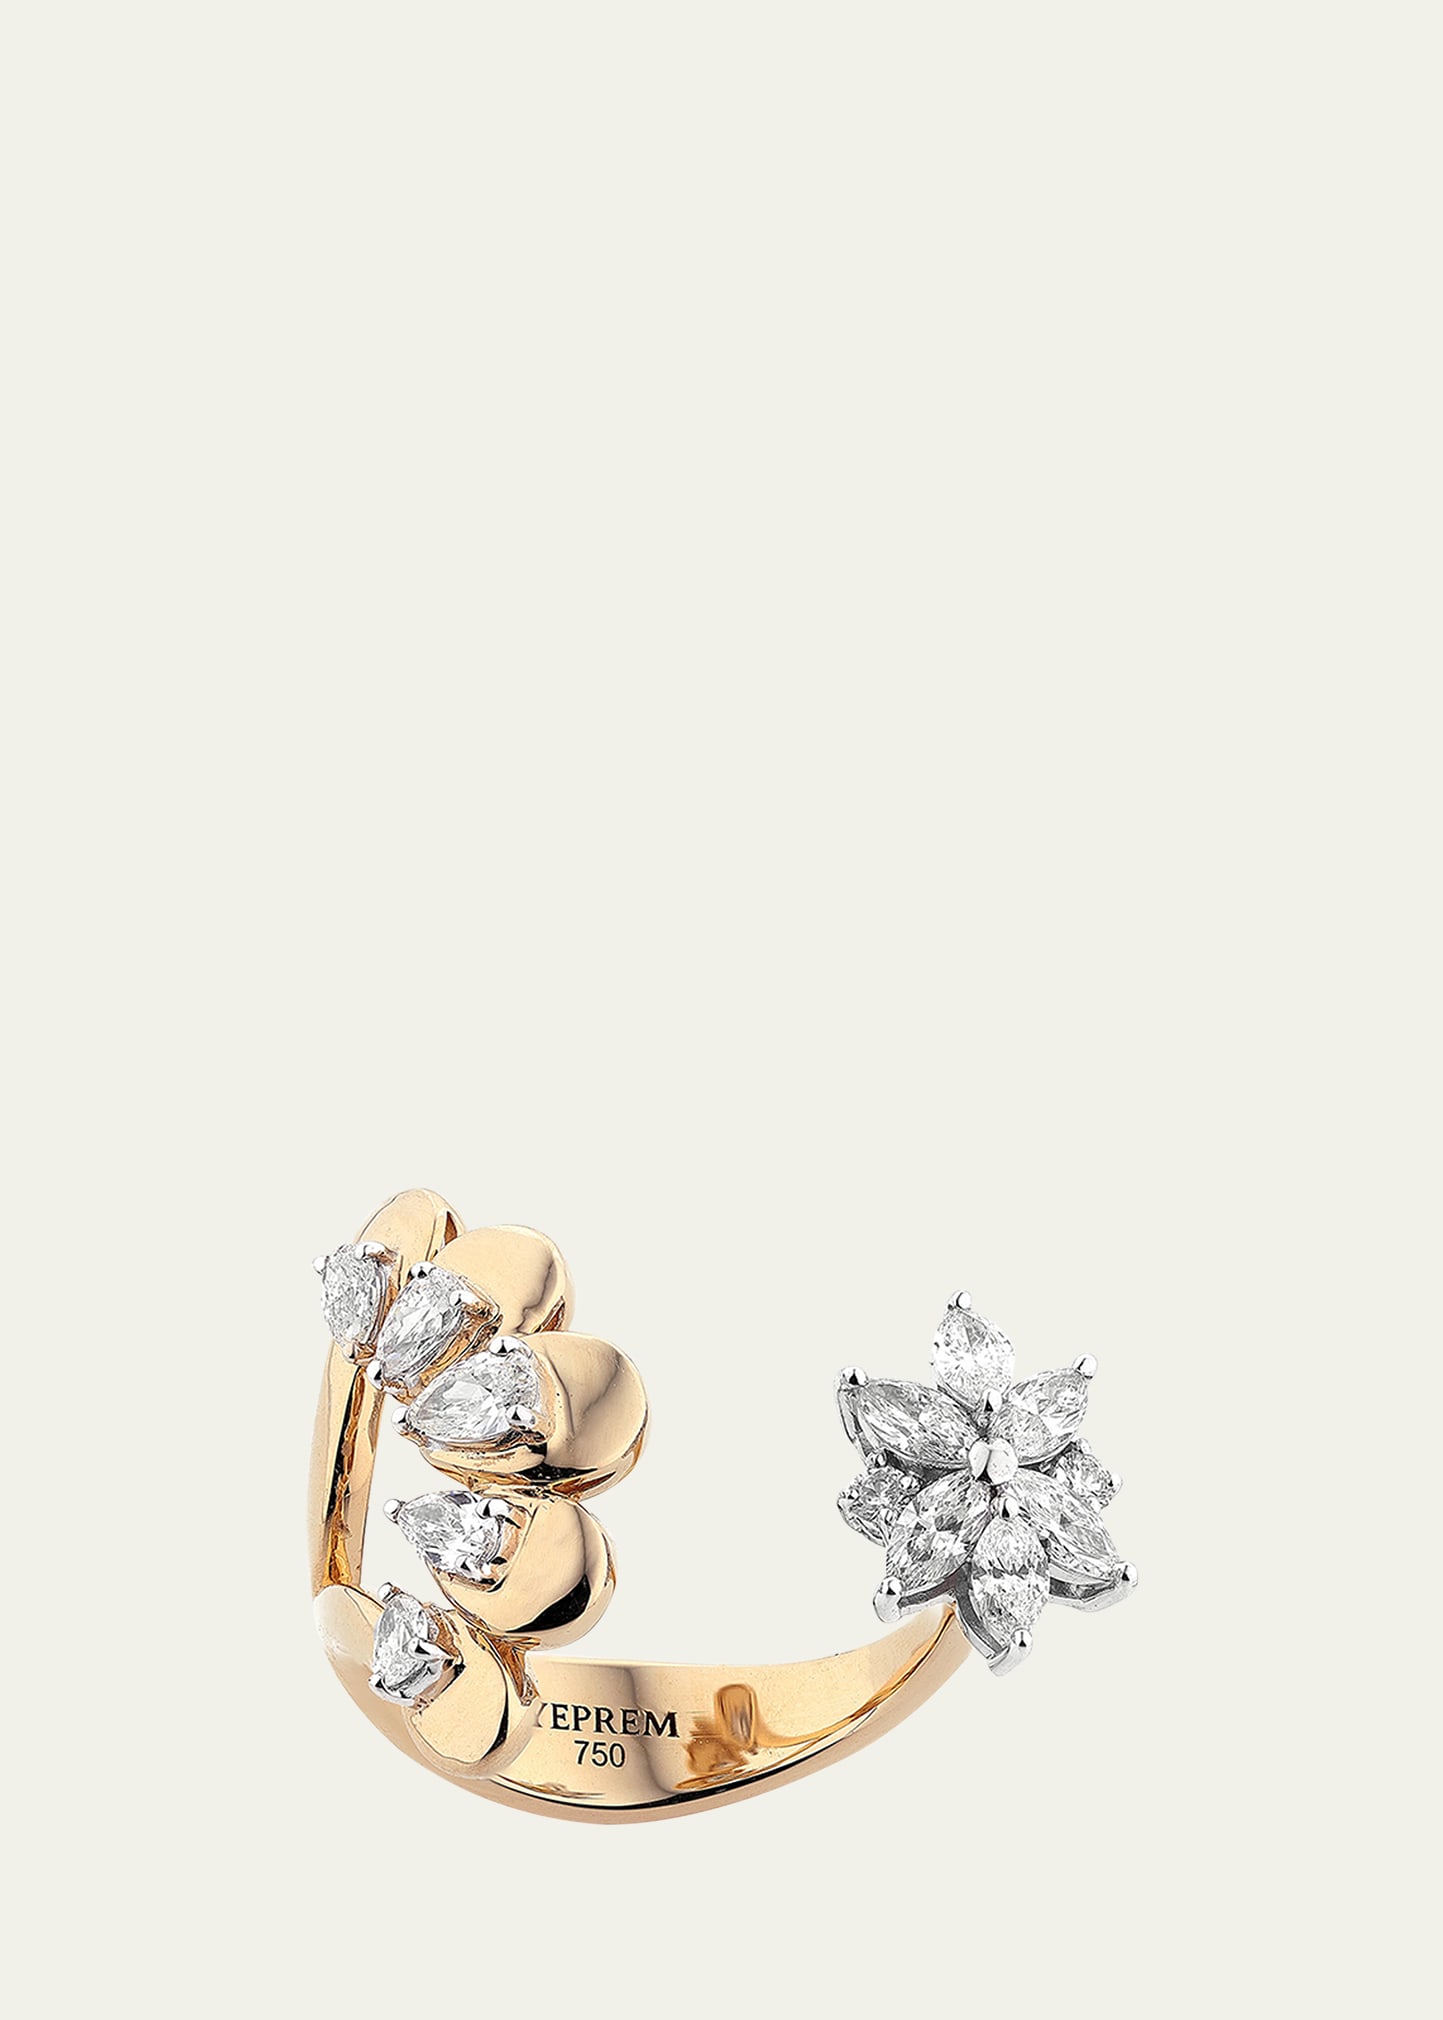 Yeprem 18k Gold Diamond Ring